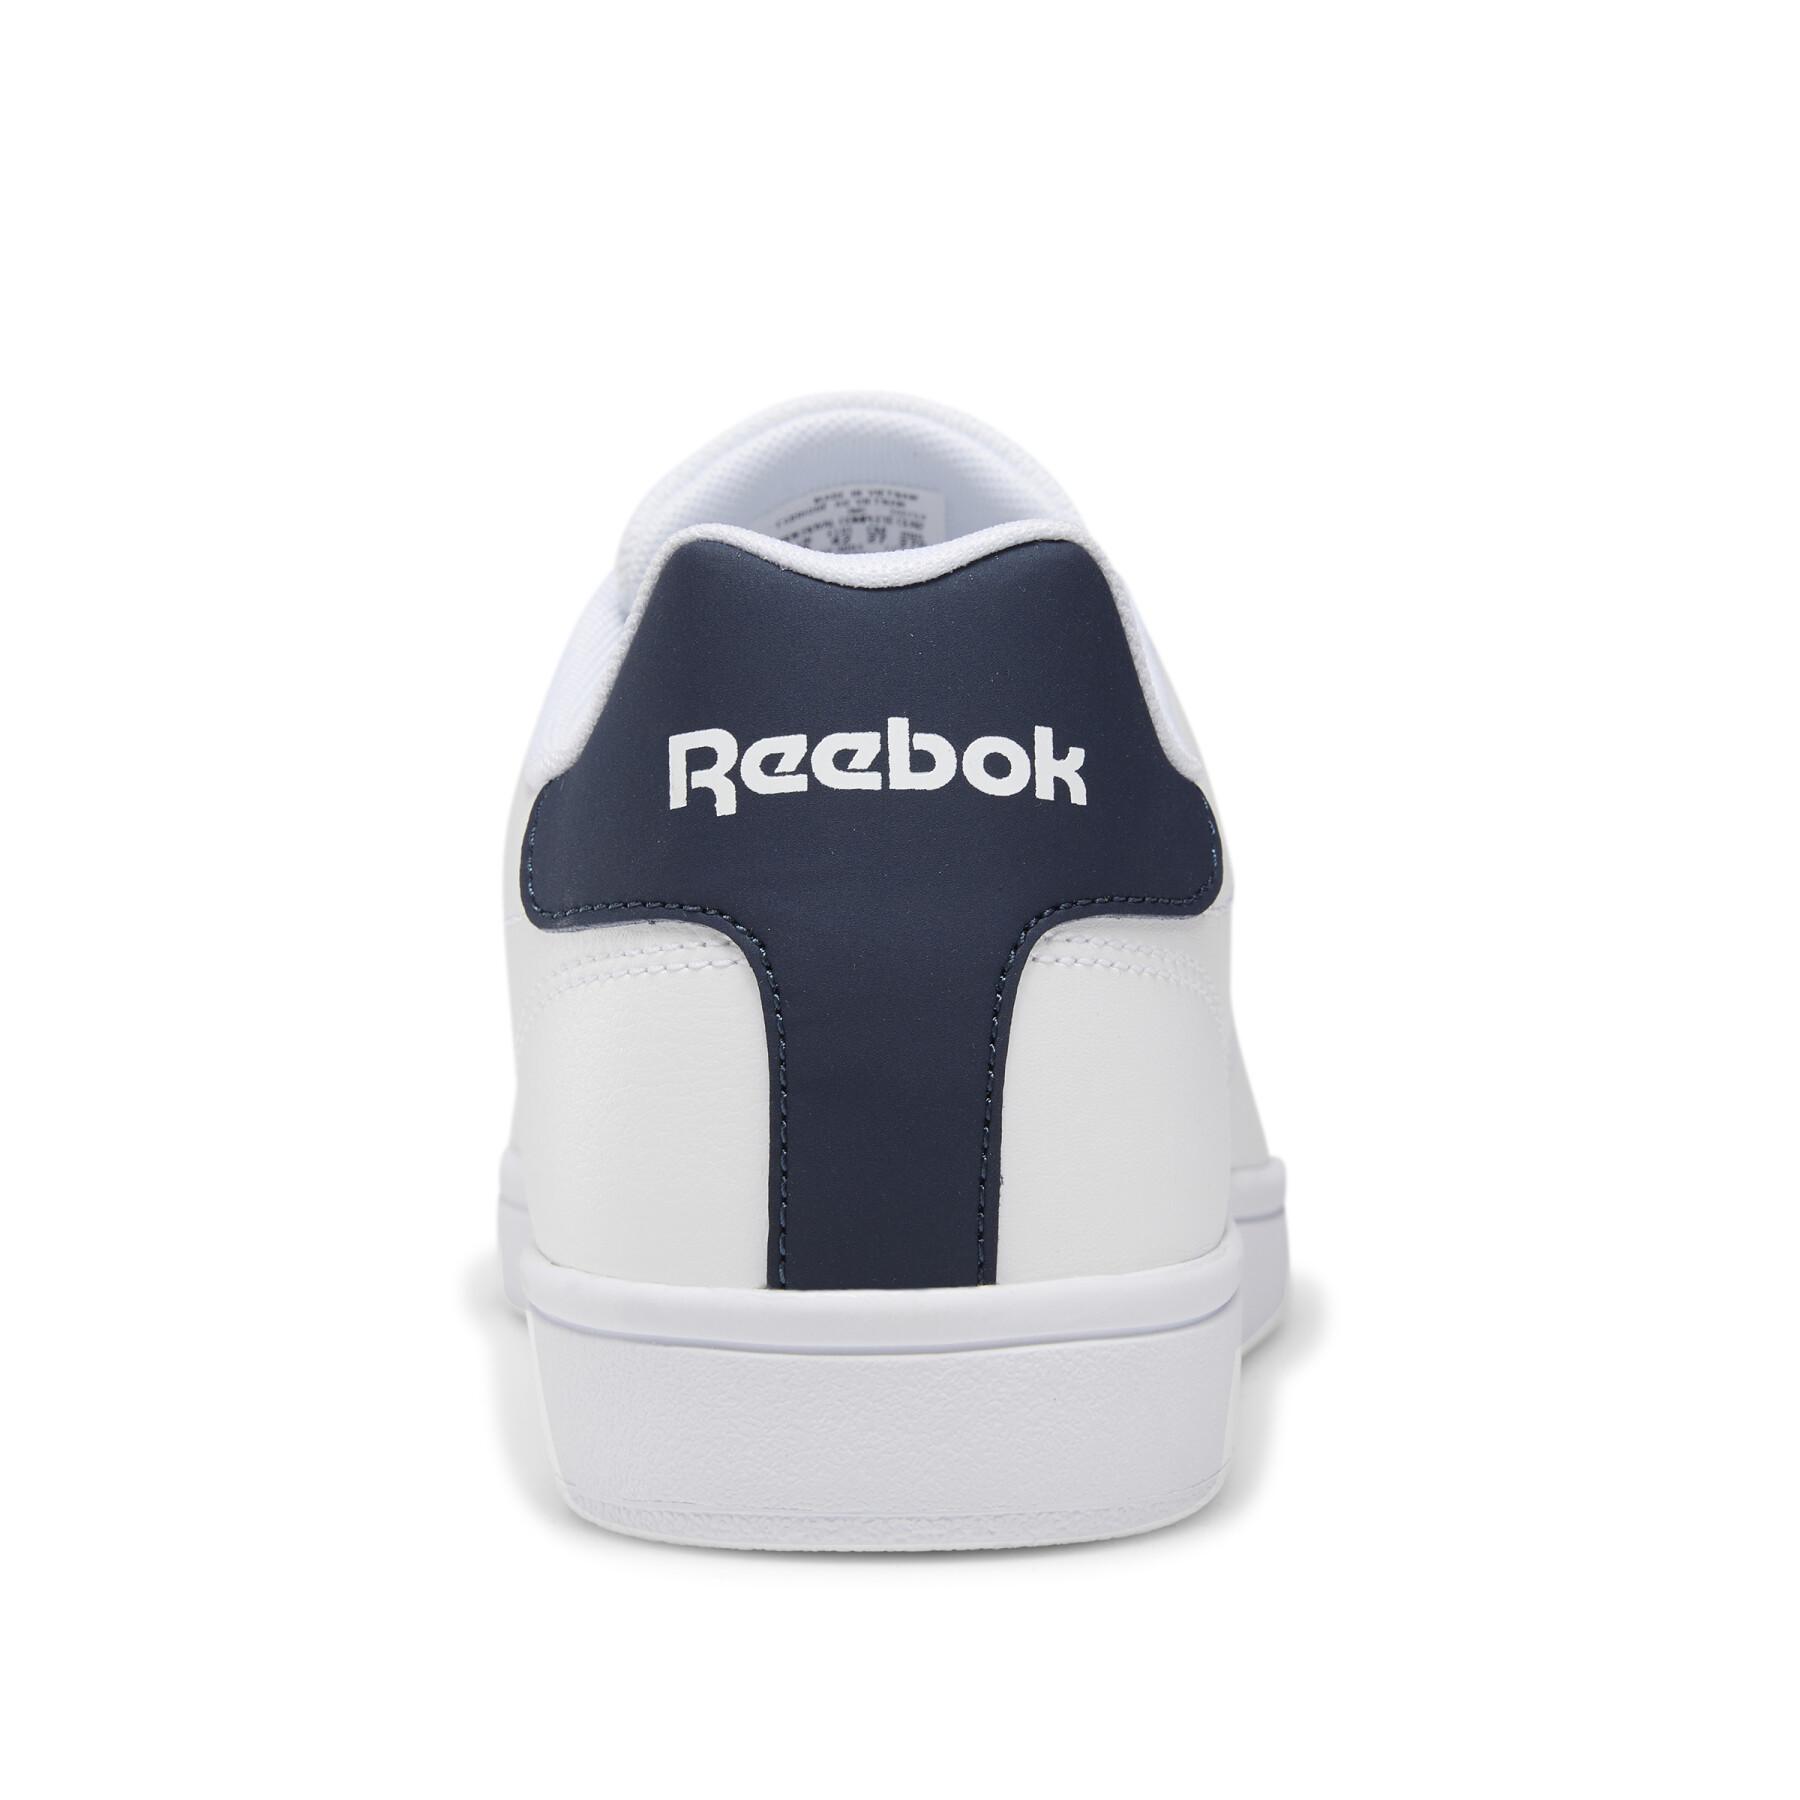 Schuhe Reebok Royal Complete Clean 2.0